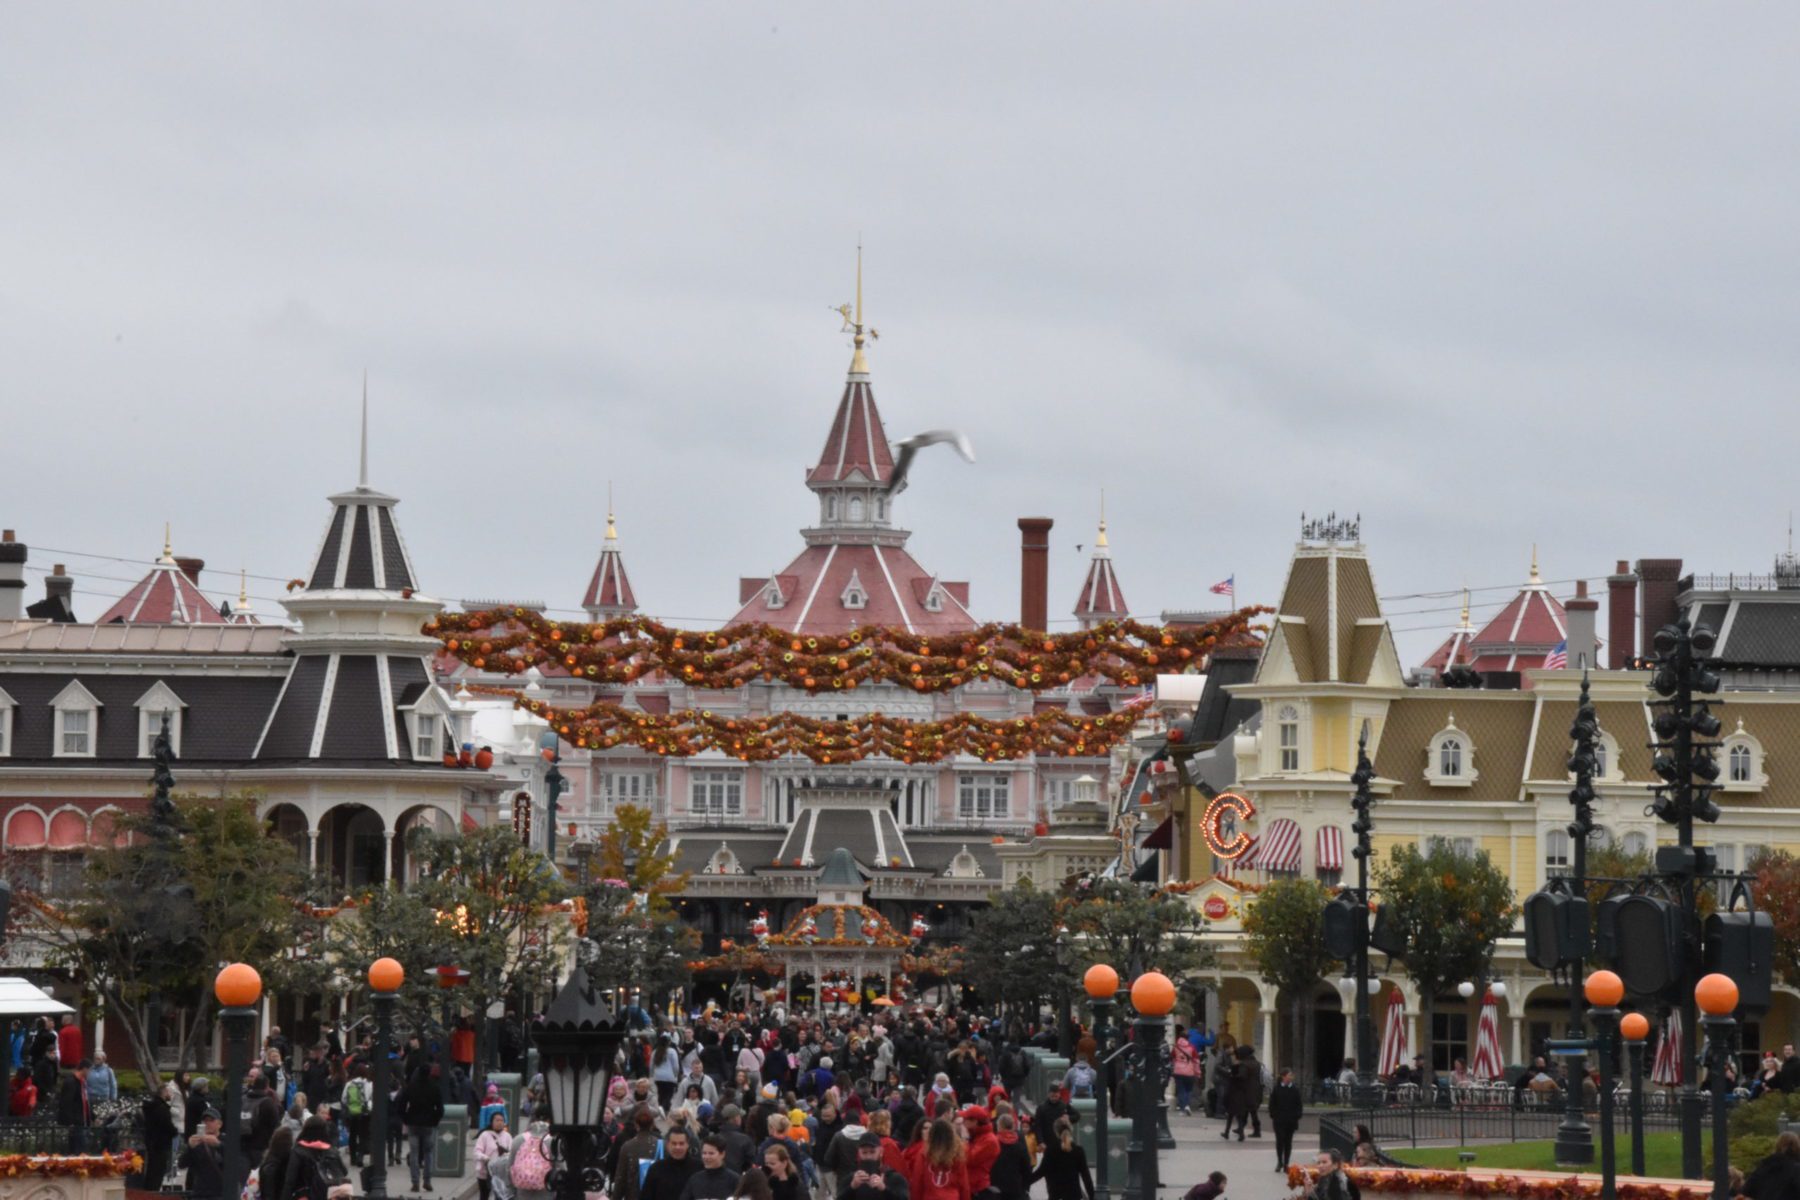 Planning a Disneyland Paris Trip